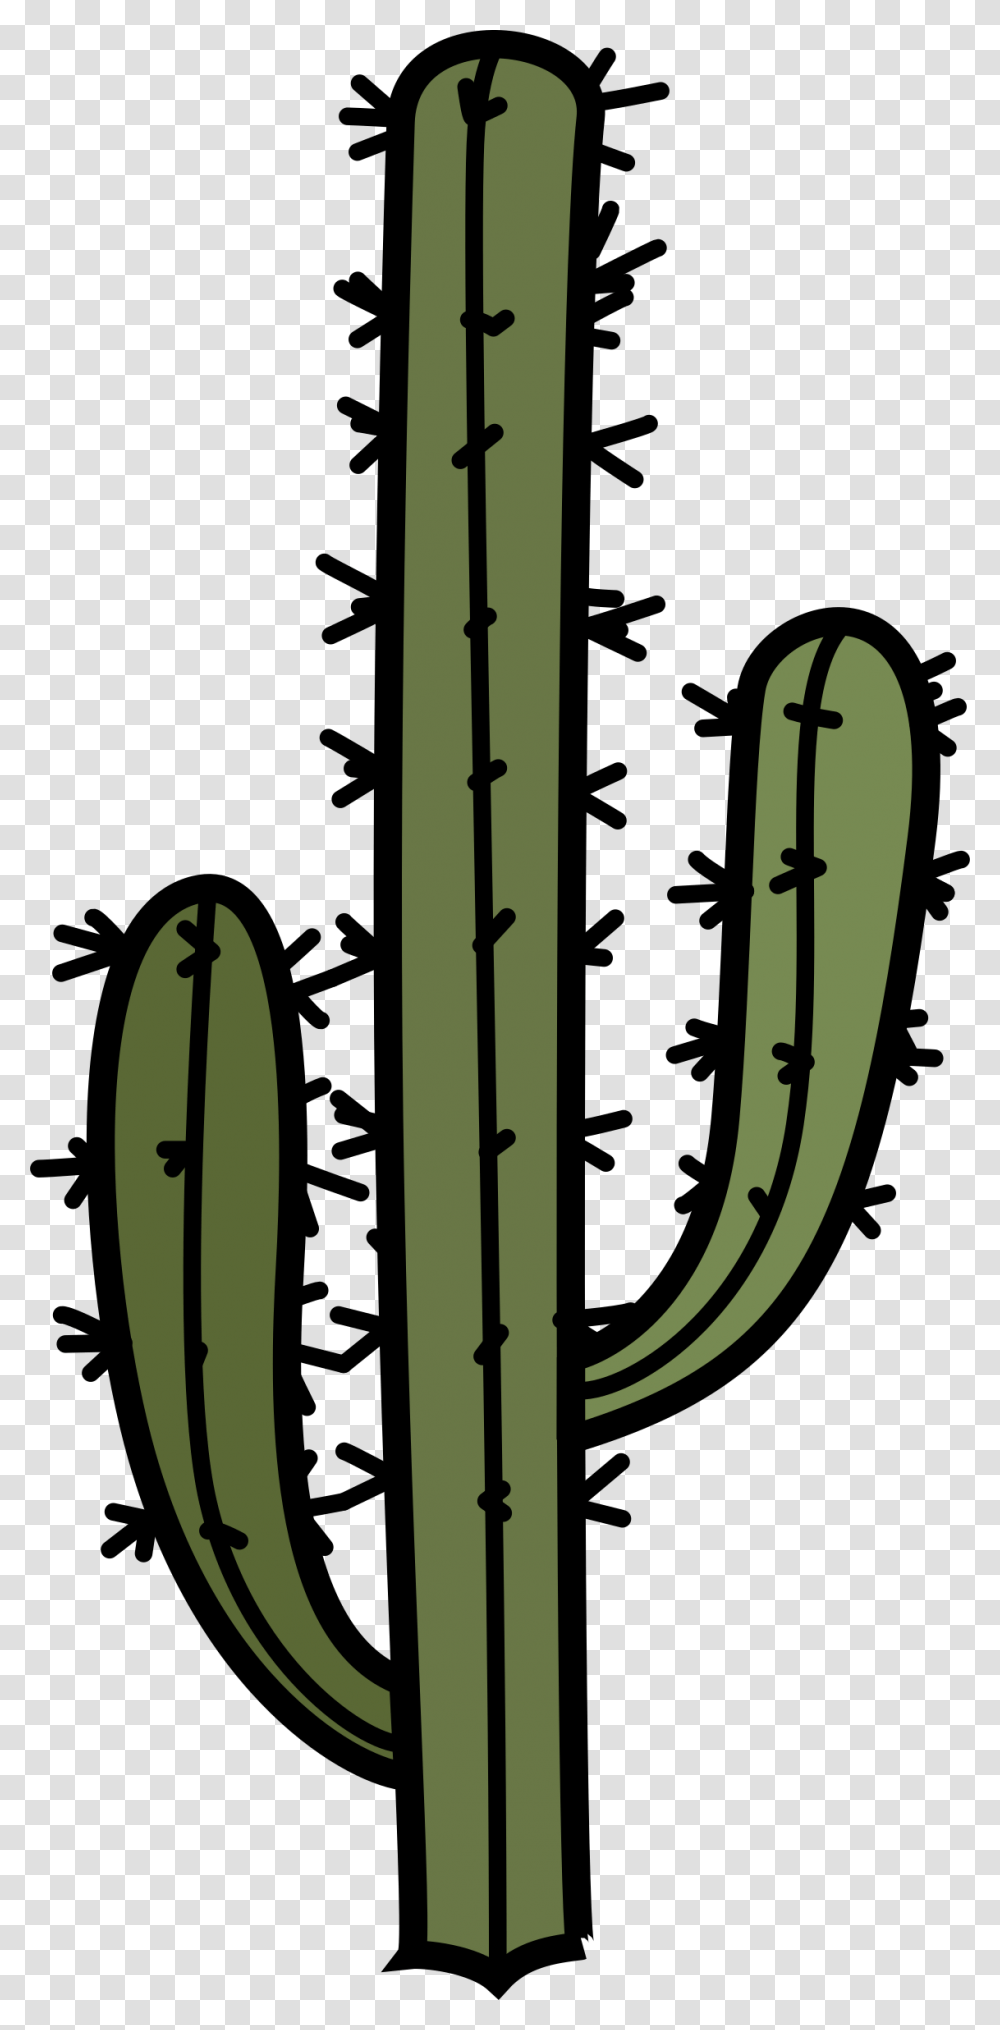 Cactus With Arms Clip Arts Cactus, Plant, Shower Faucet, Bamboo, Grass Transparent Png